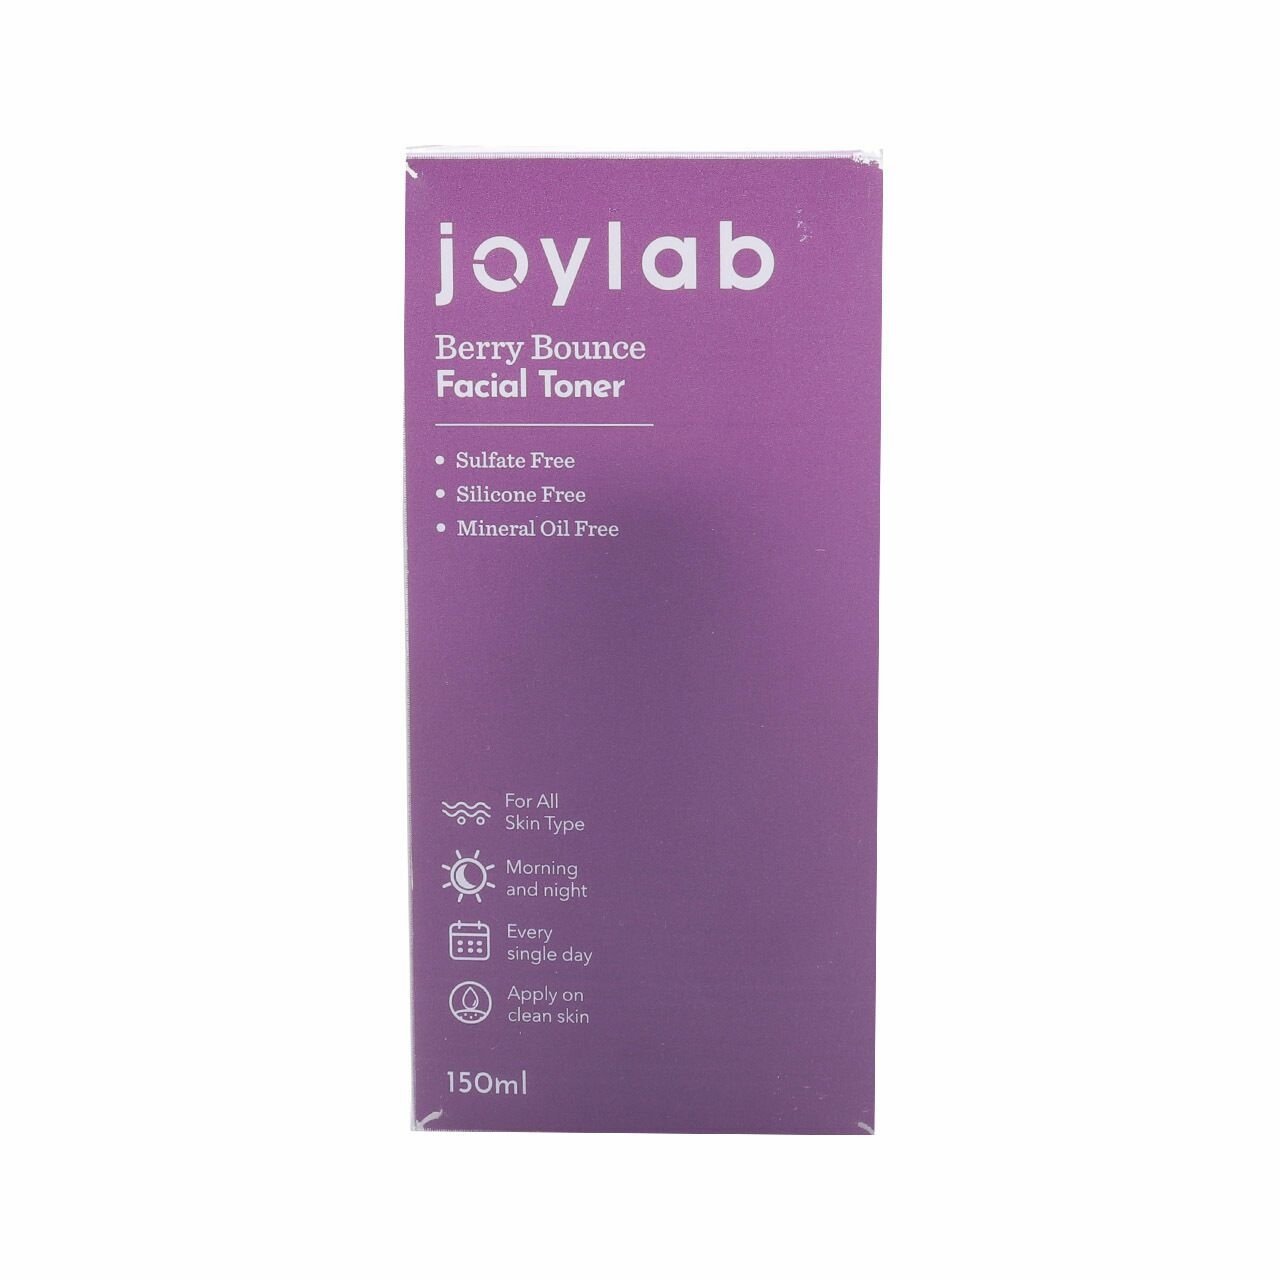 joylab Berry Bounce Facial Toner Skin Care